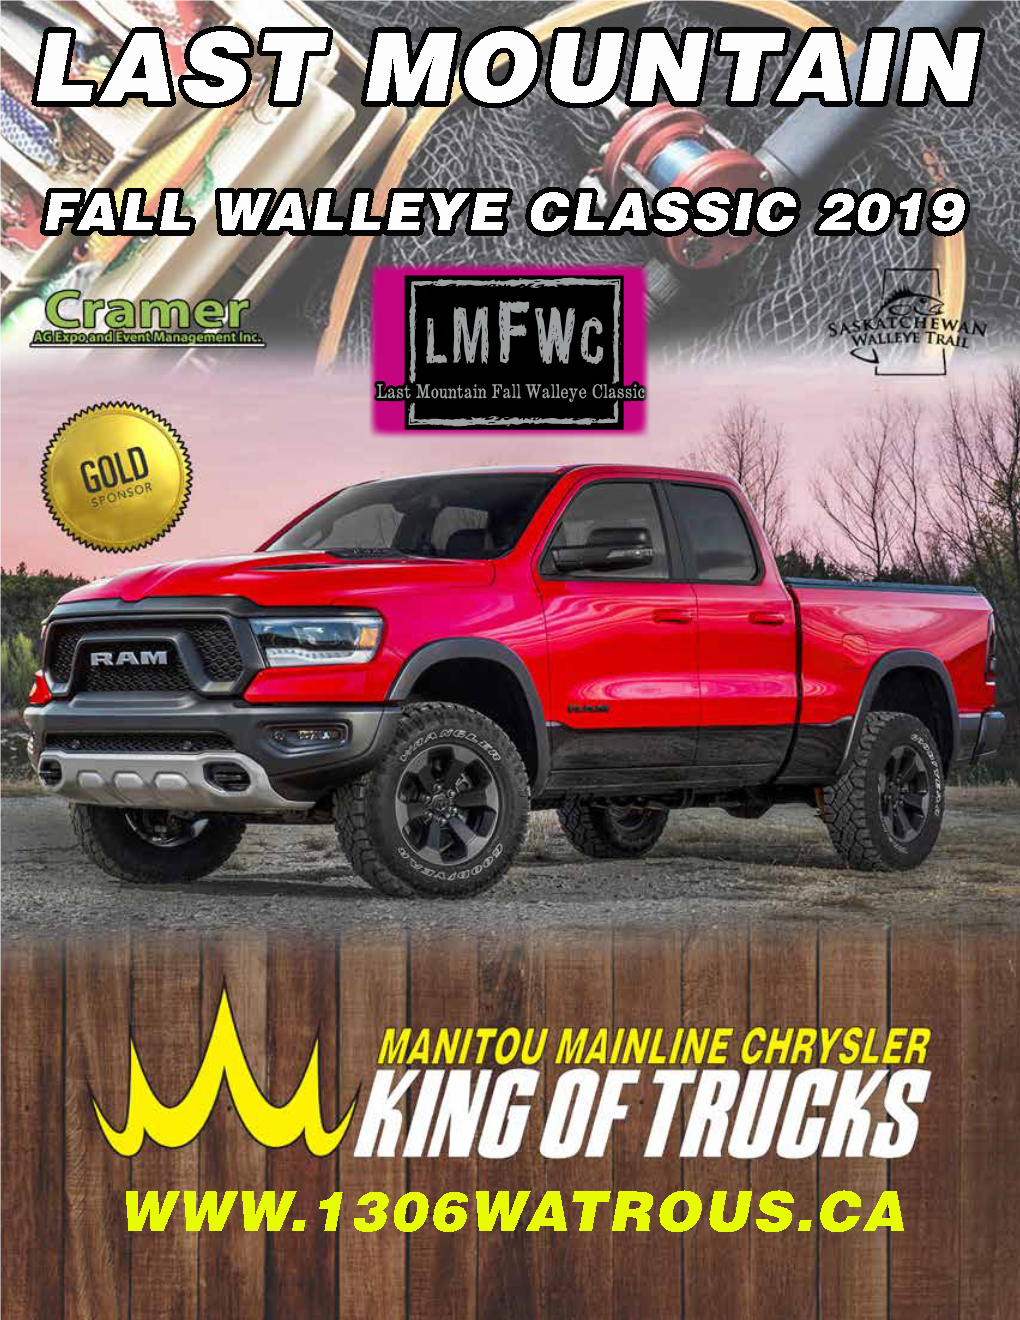 Last Mountain Fall Walleye Classic 2018 Champions